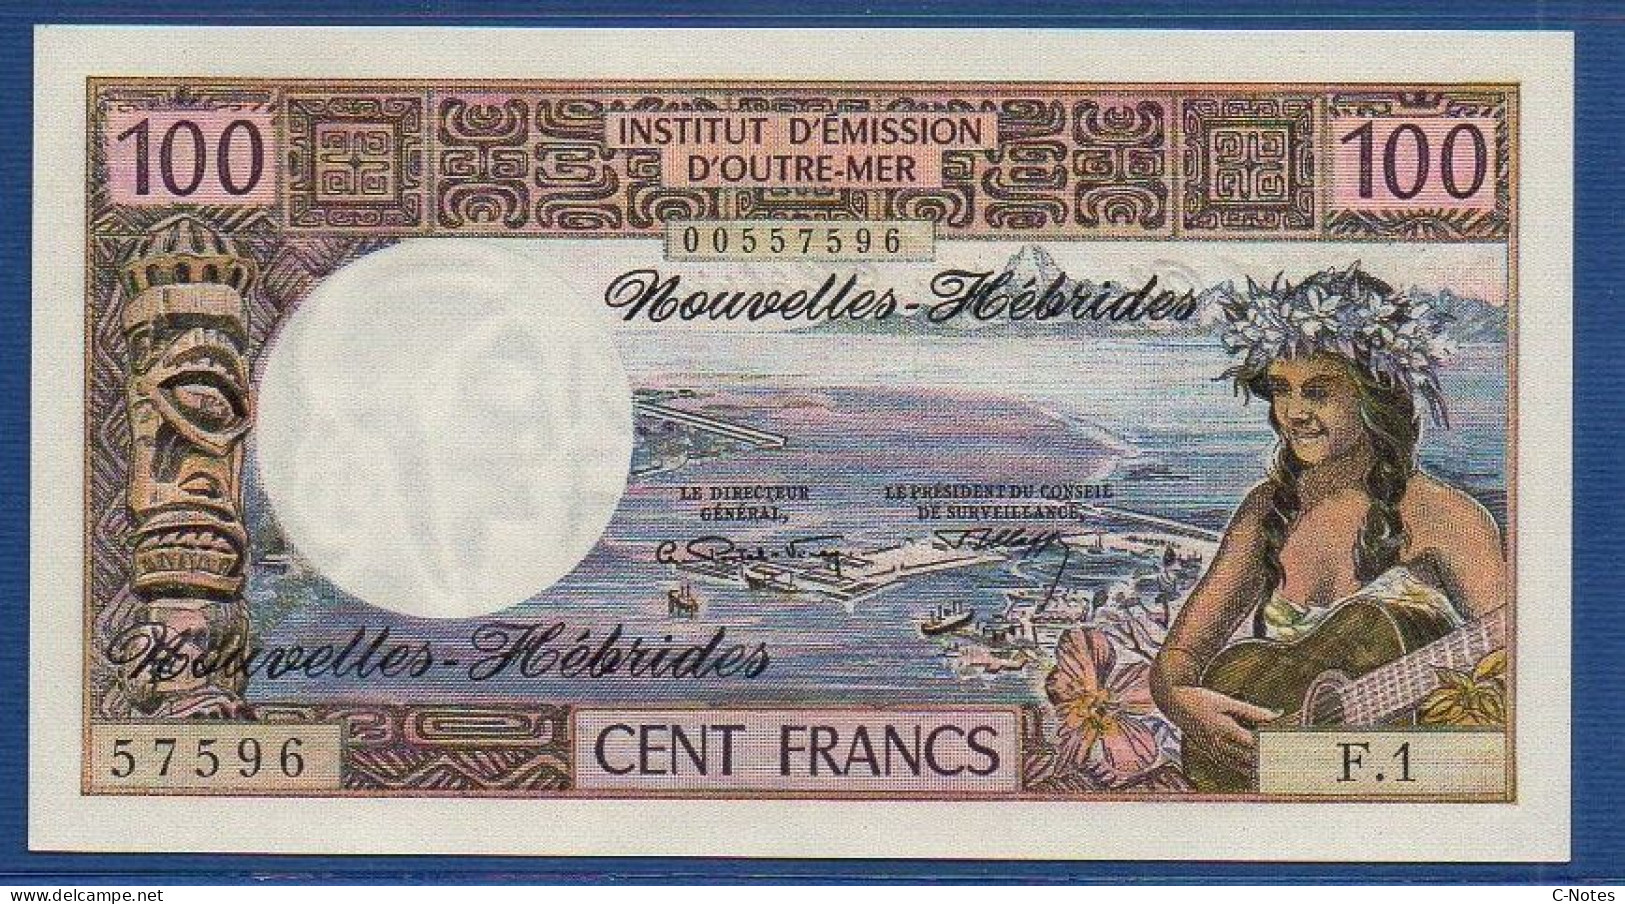 NEW HEBRIDES - P.18b – 100 Francs ND (1972)  UNC, S/n F.1 57596 - Nueva Hebrides